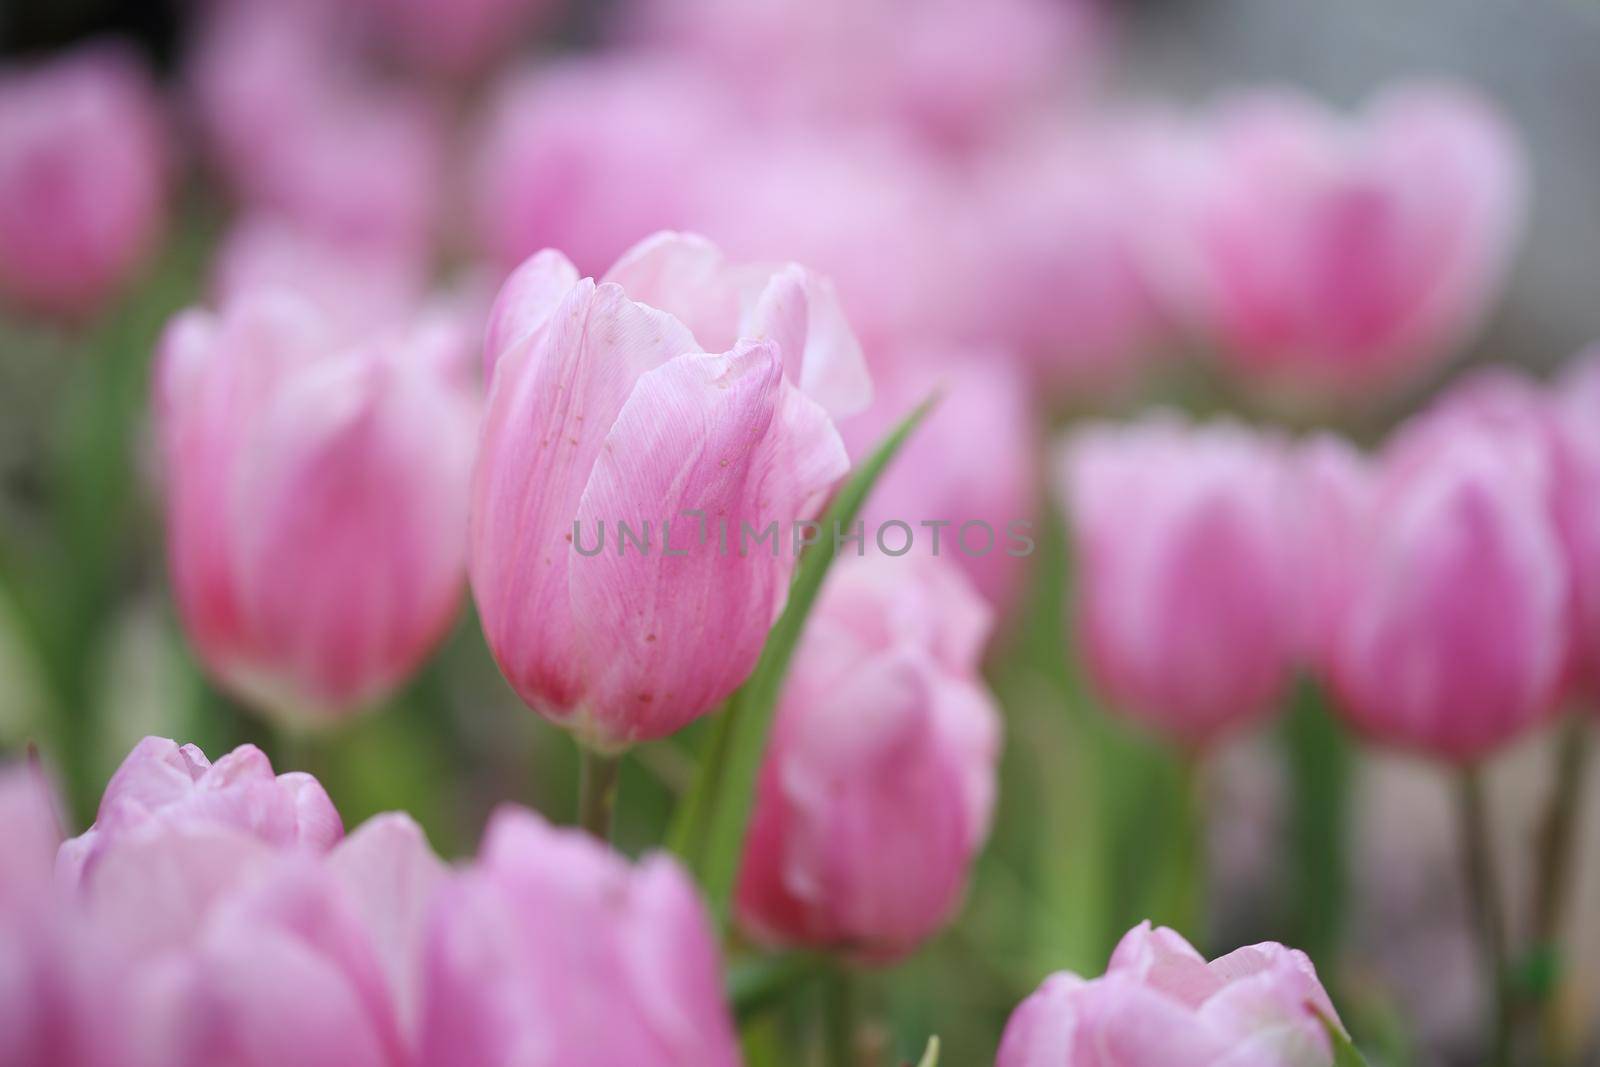 beautiful pink tulip by geargodz